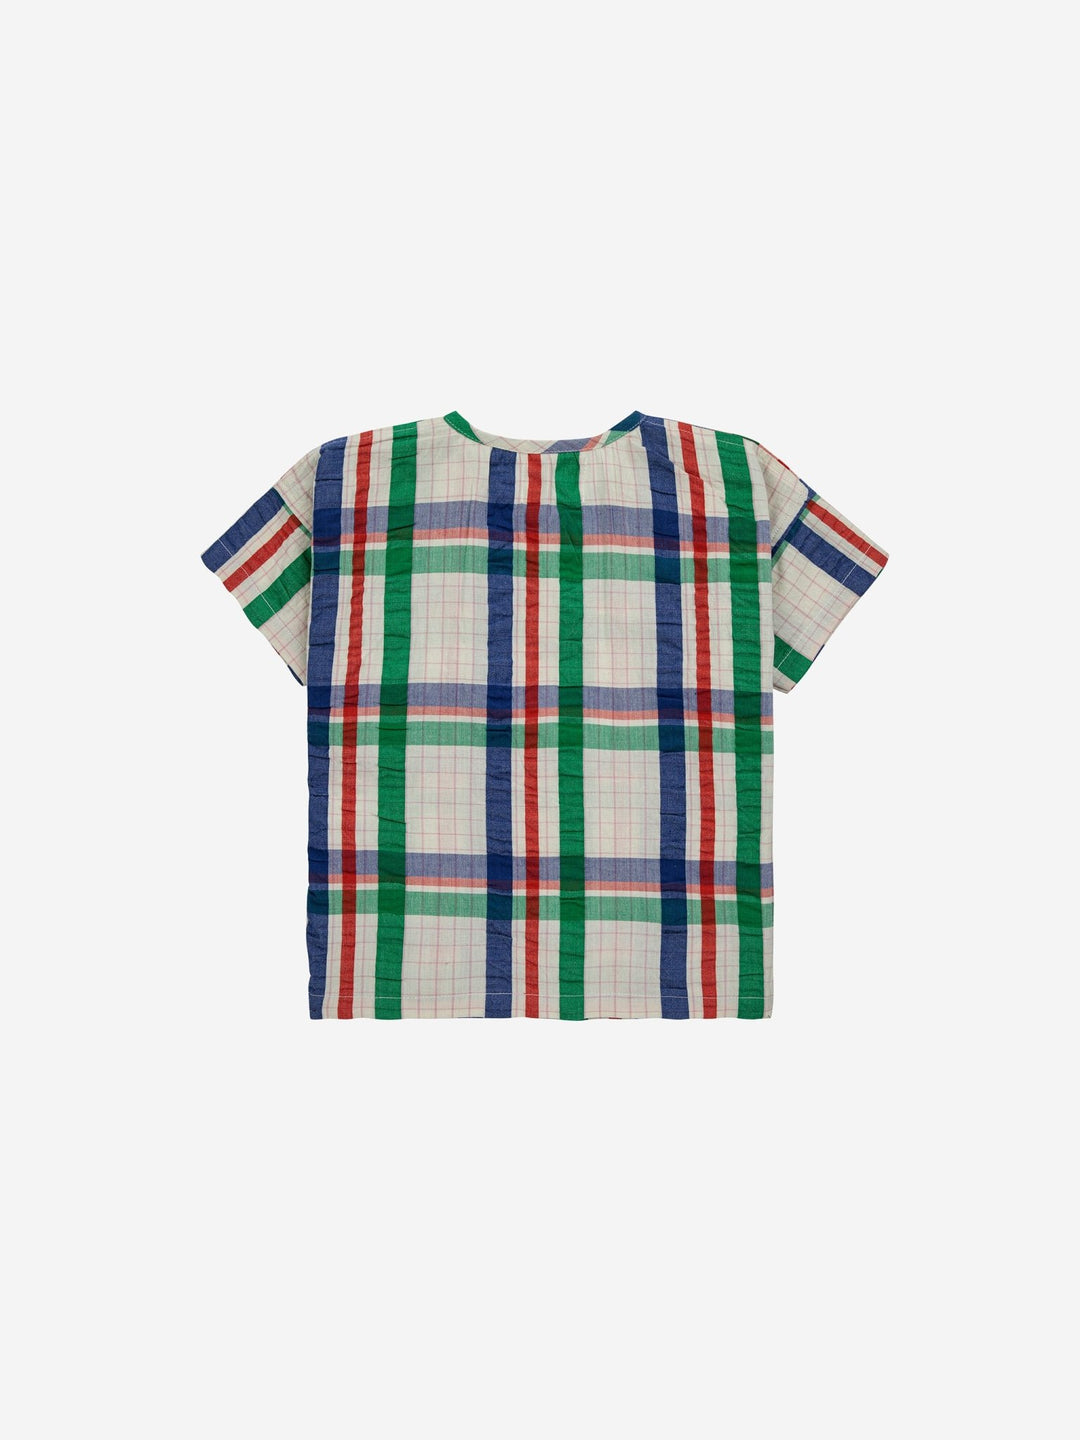 Madra Checks Woven Shirt - Multicolor - Posh New York